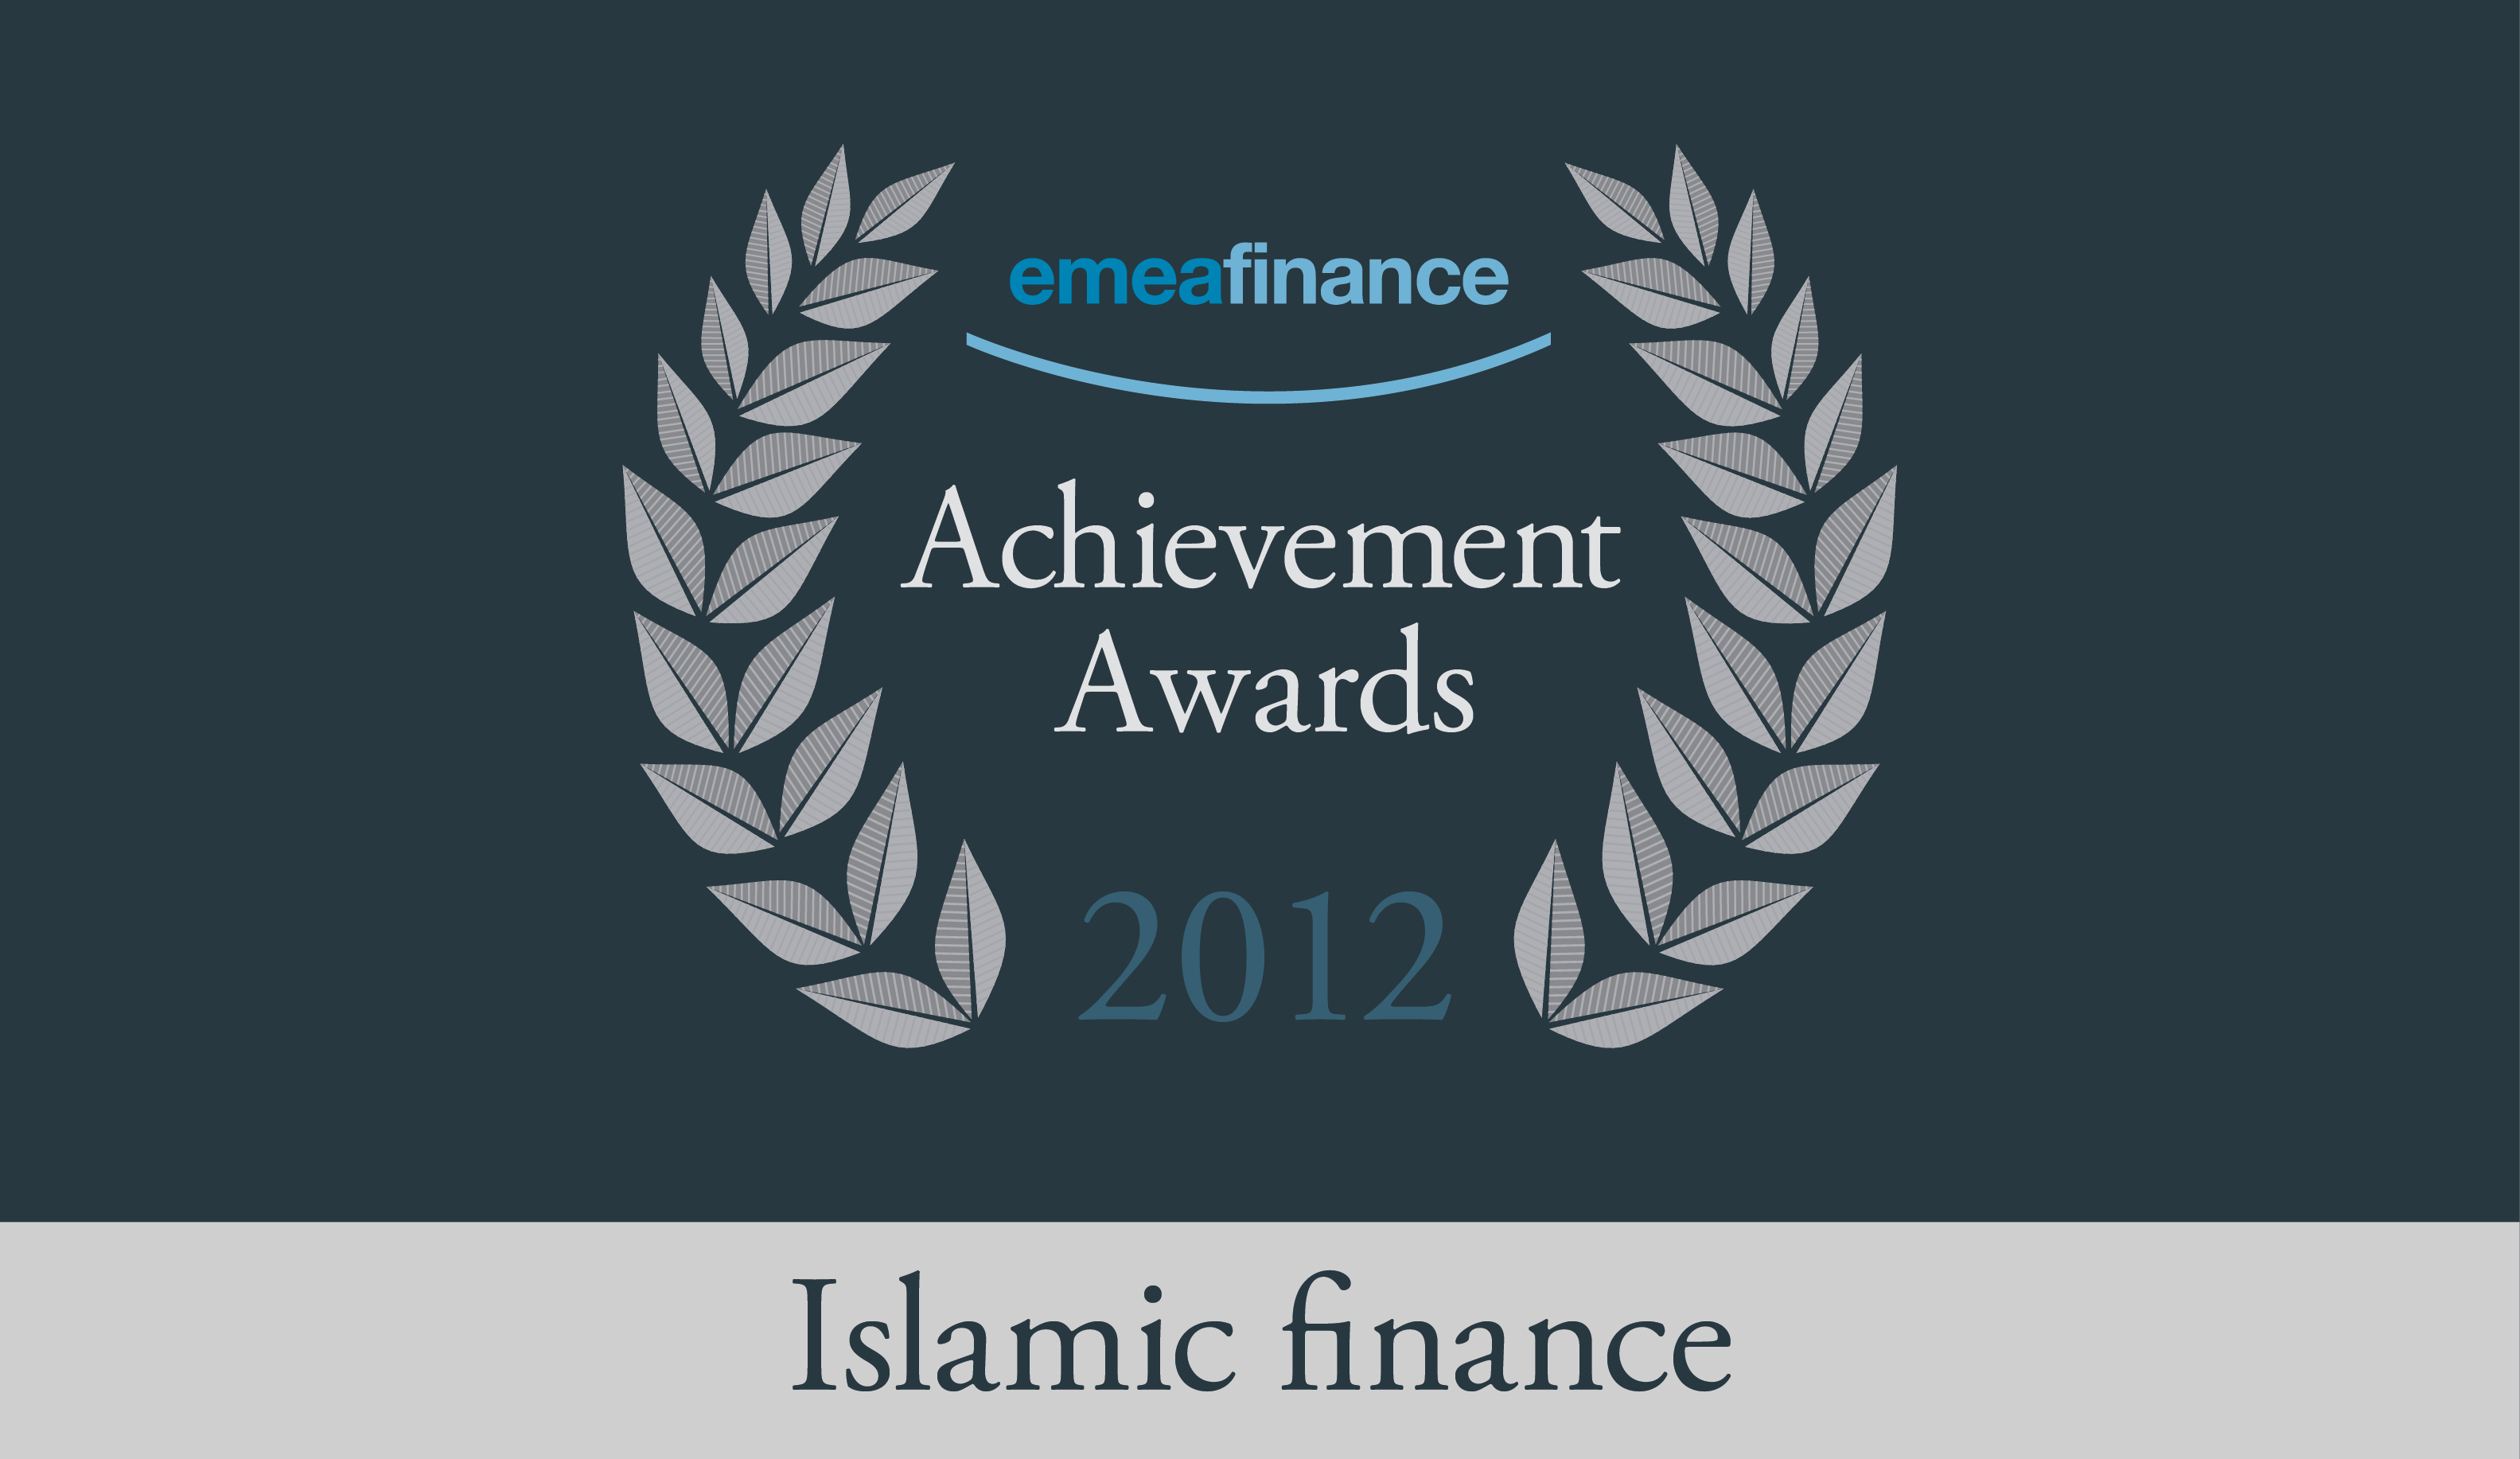 Achievement Awards 2012: Islamic finance